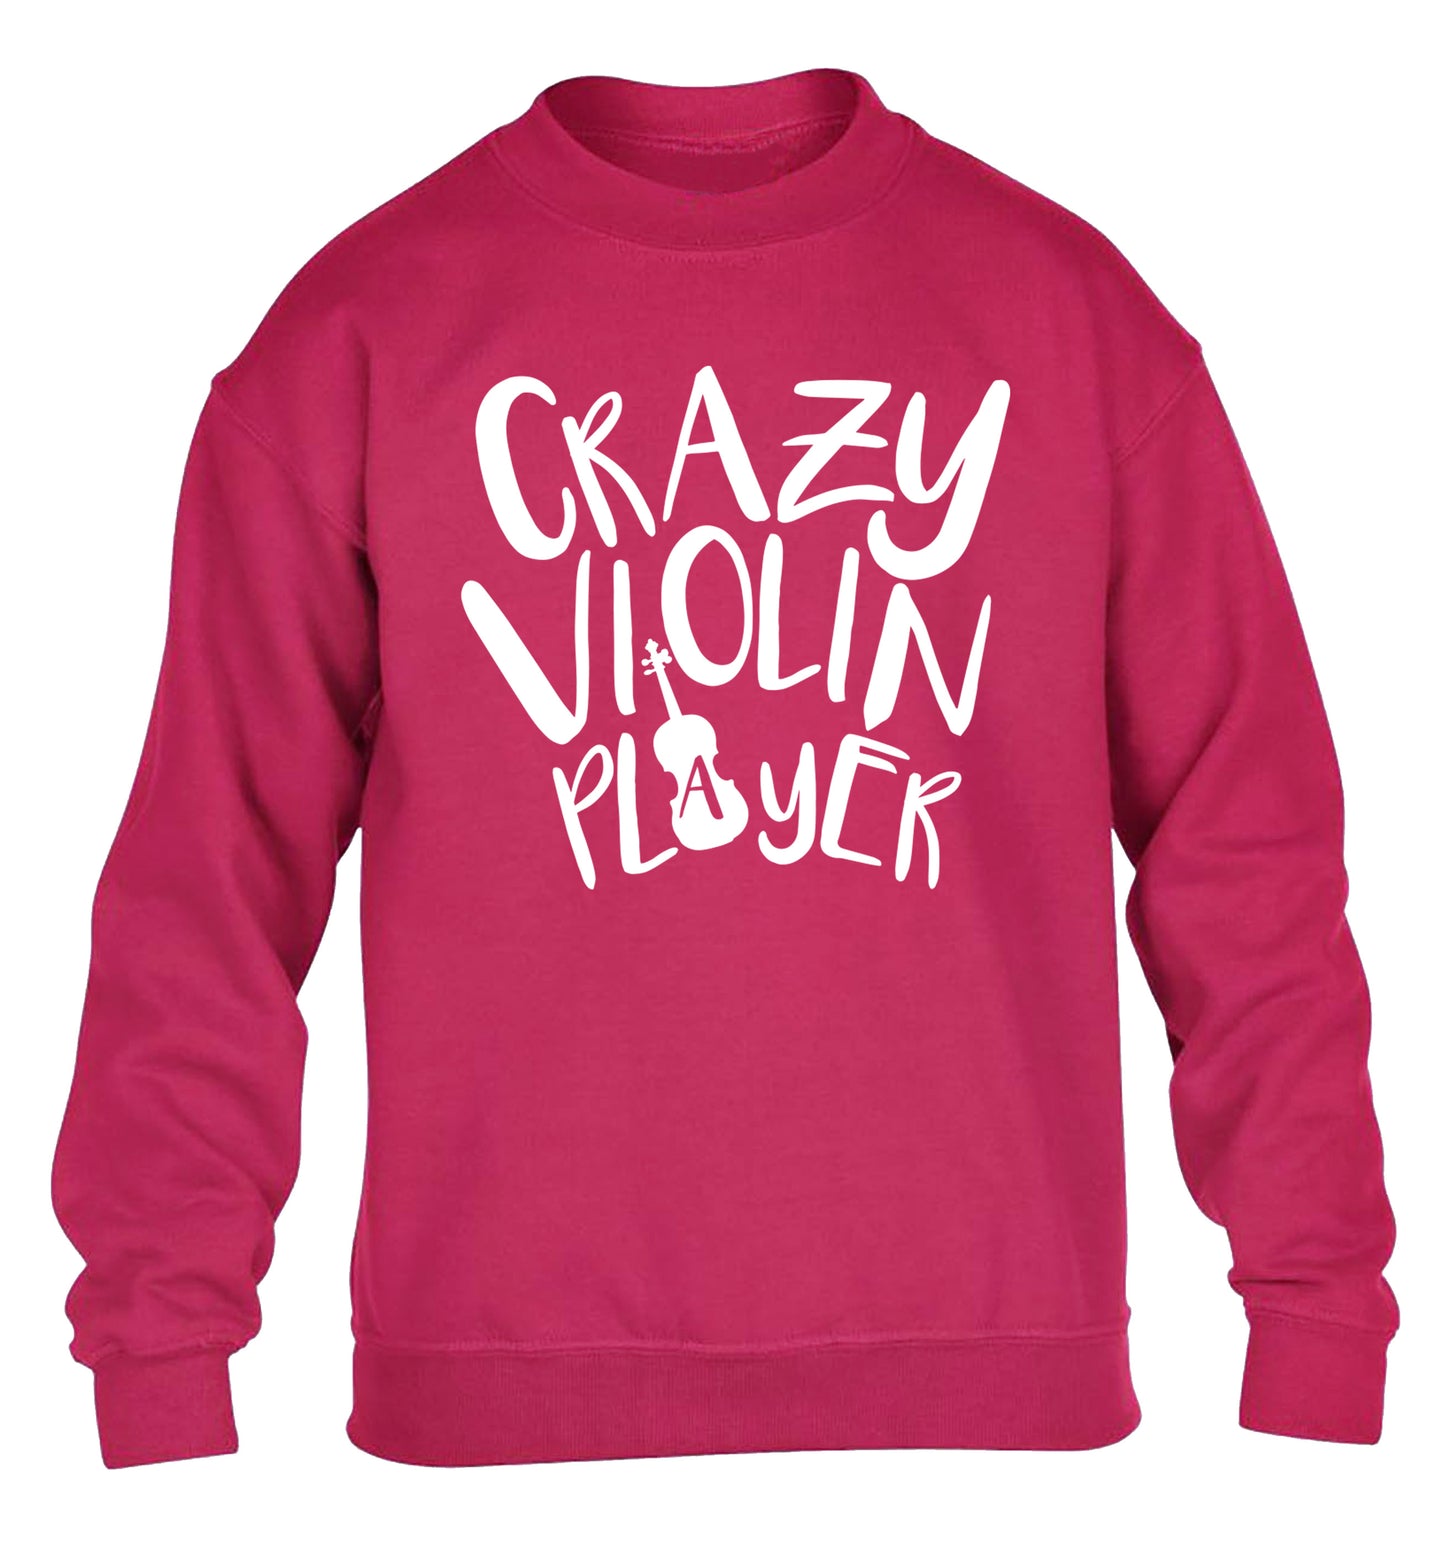 Crazy Violin Player children's pink sweater 12-13 Years